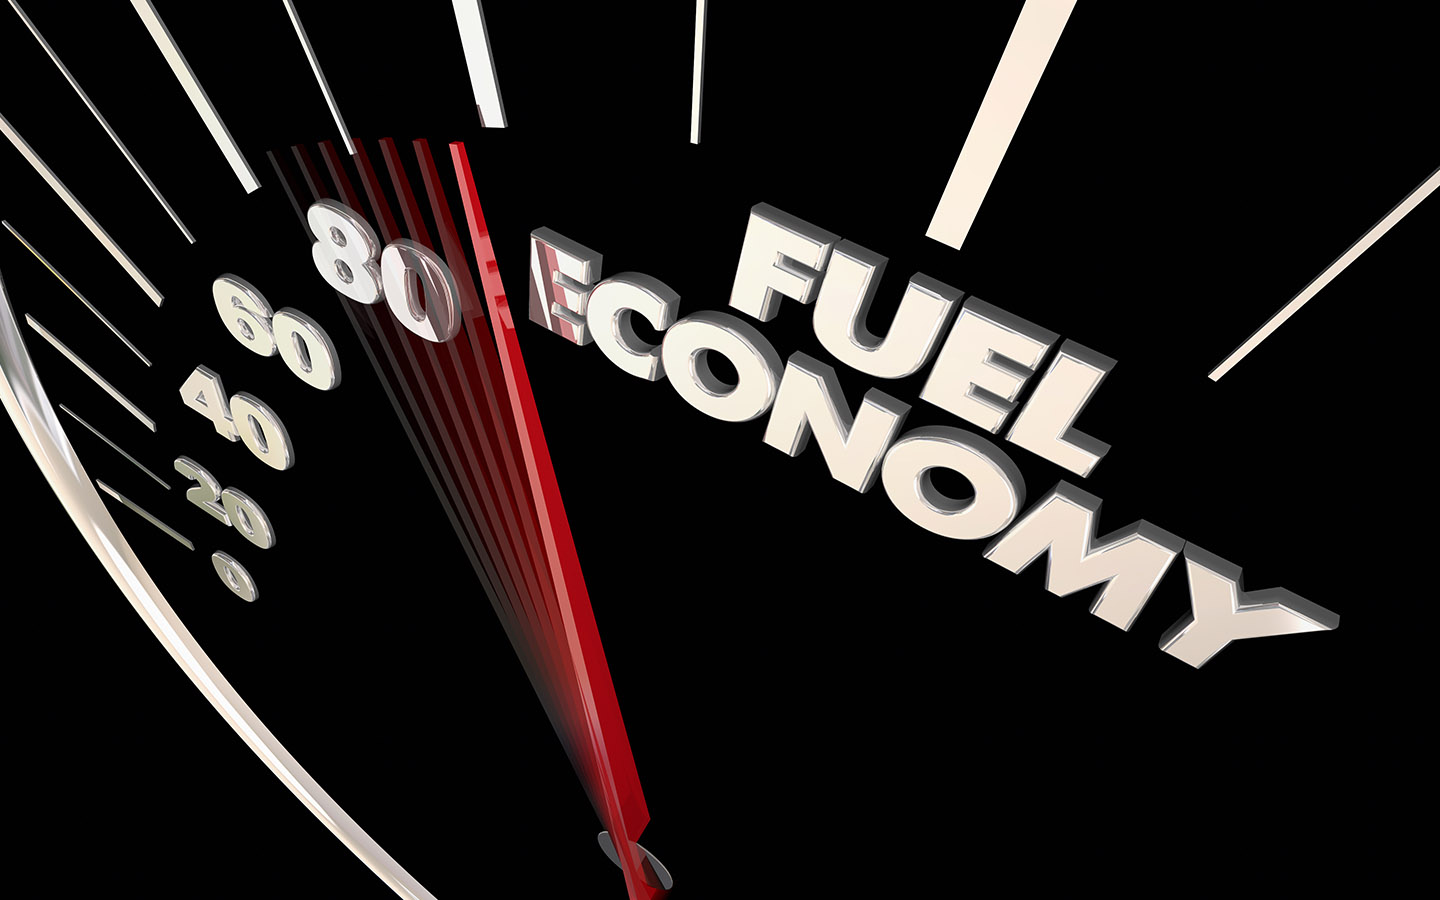 hypermiling helps maximise fuel economy